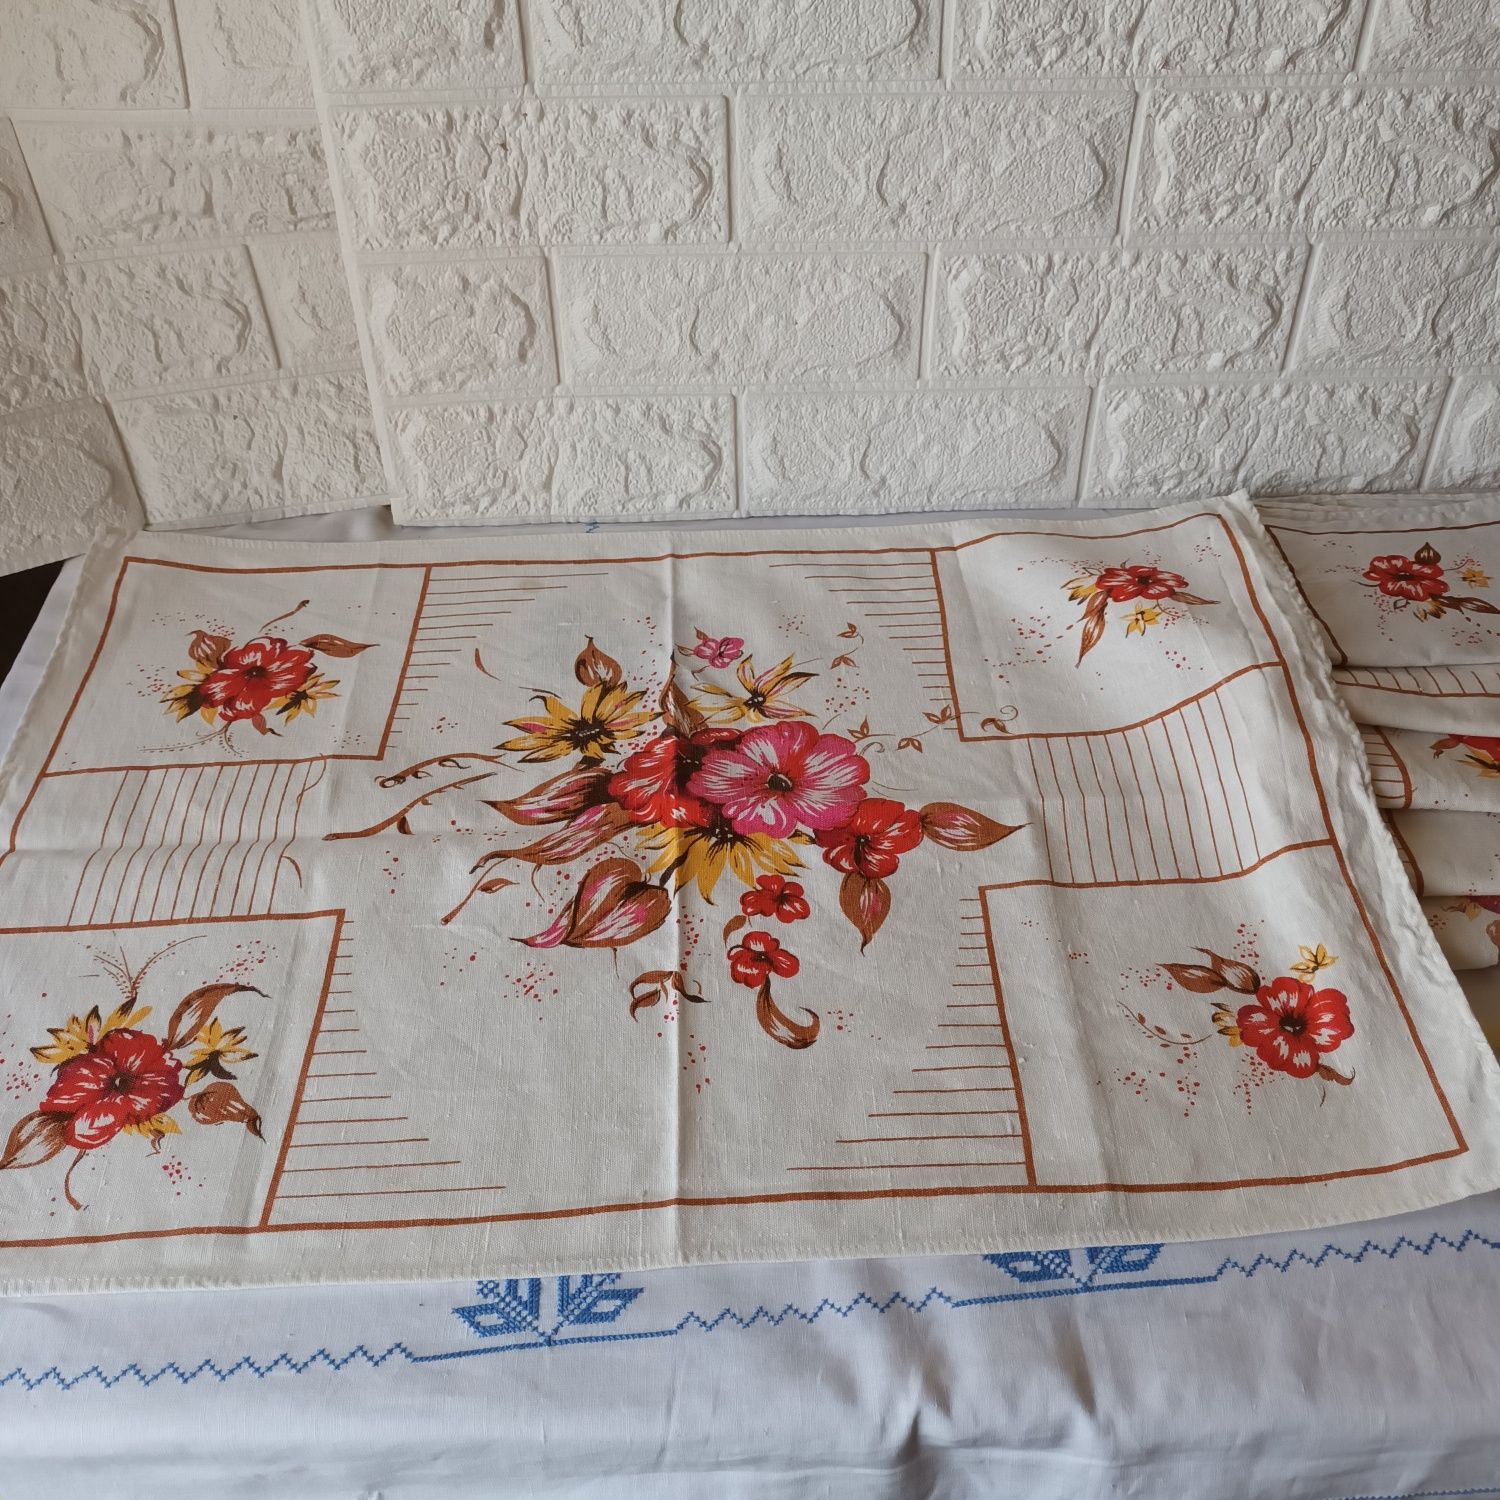 Кухонные полотенца винтаж из шкафа СССР